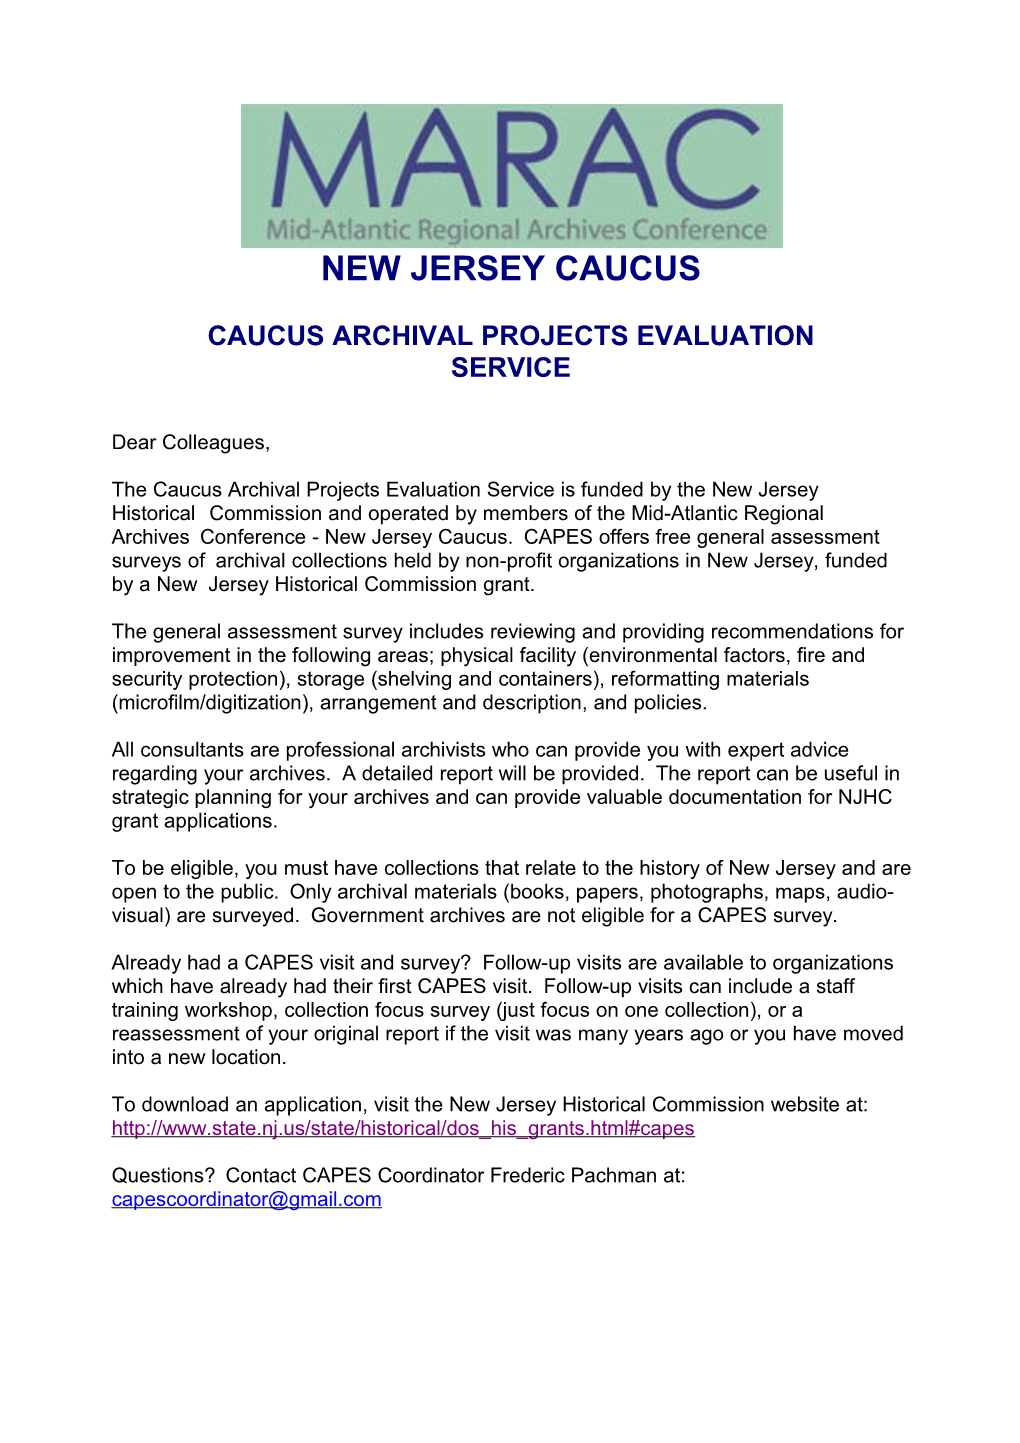 Caucus Archival Projects Evaluation Service